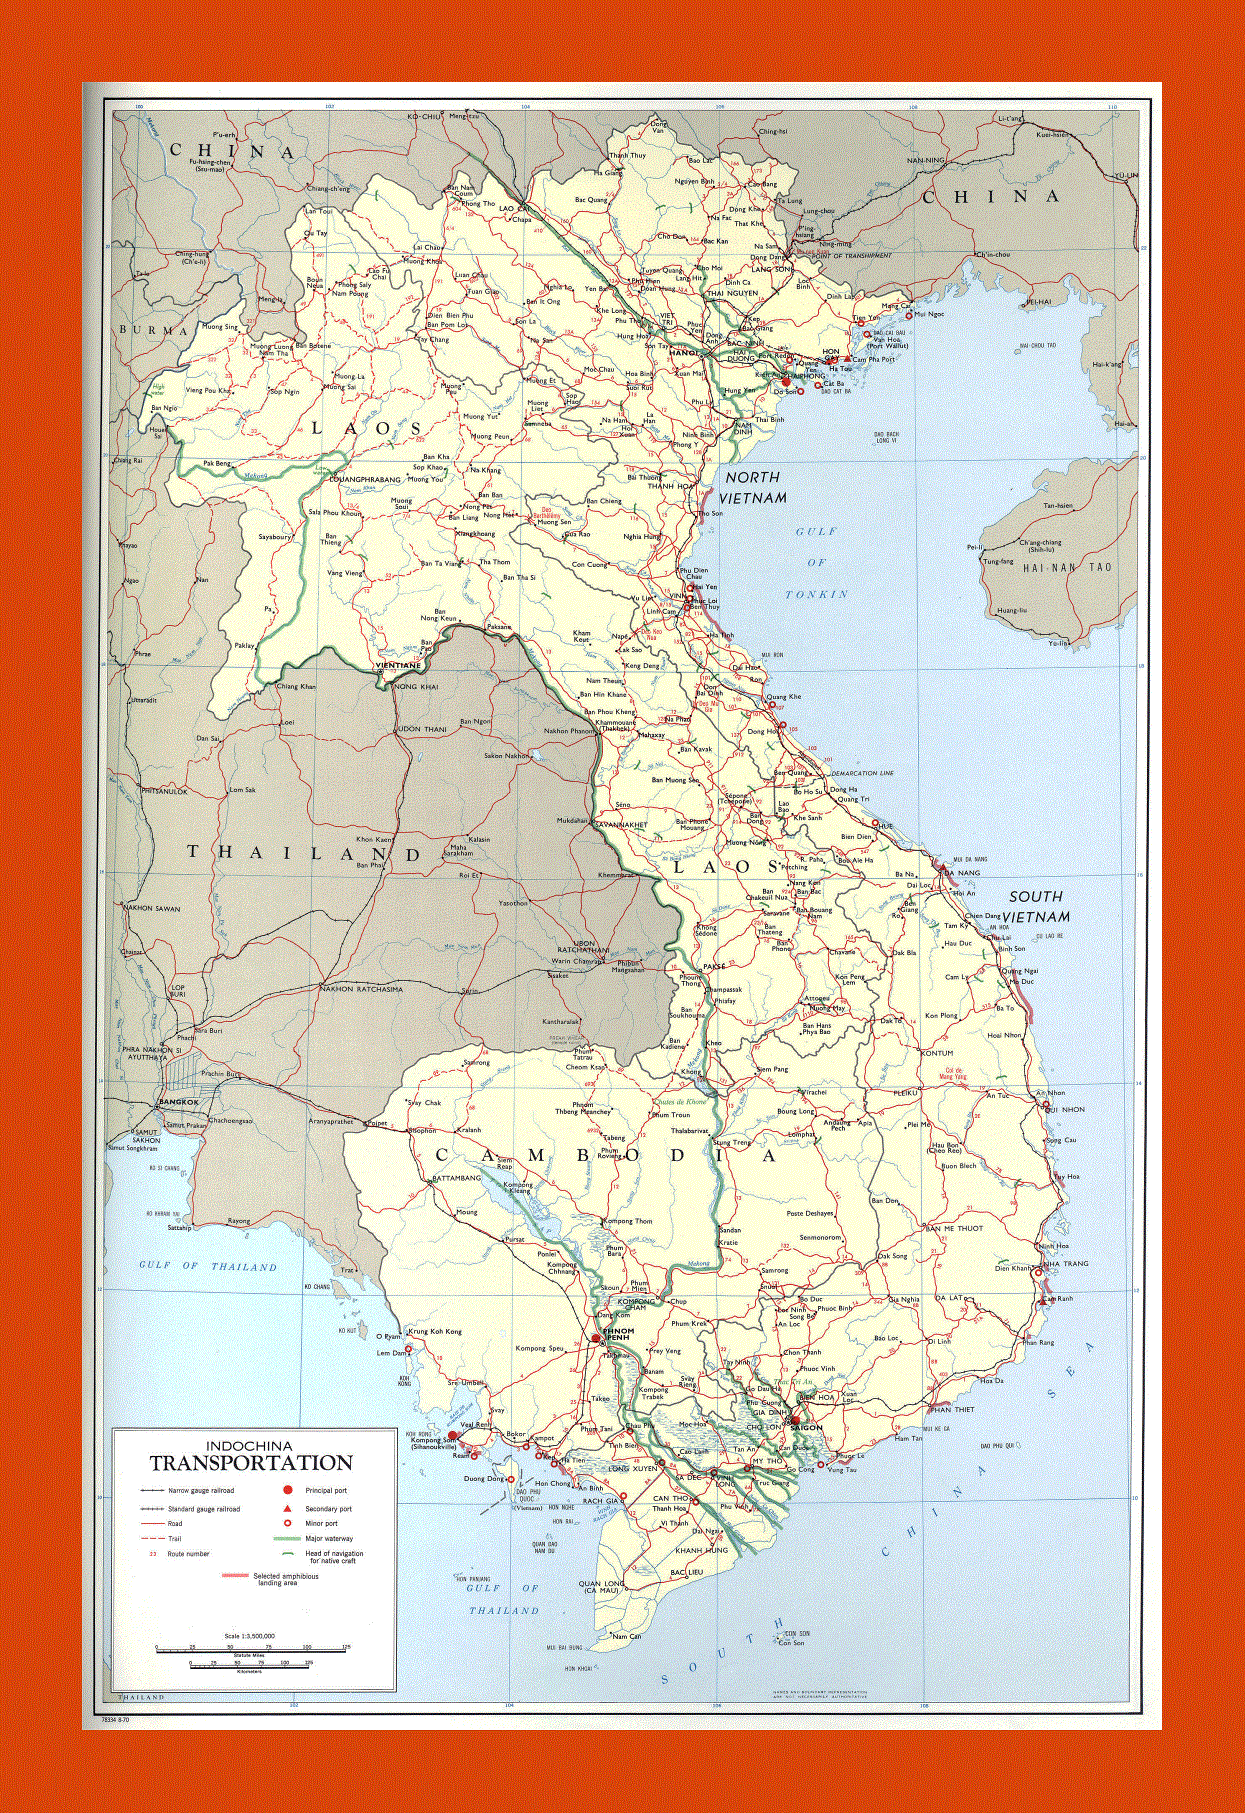 Transportation map of Indochina - 1970